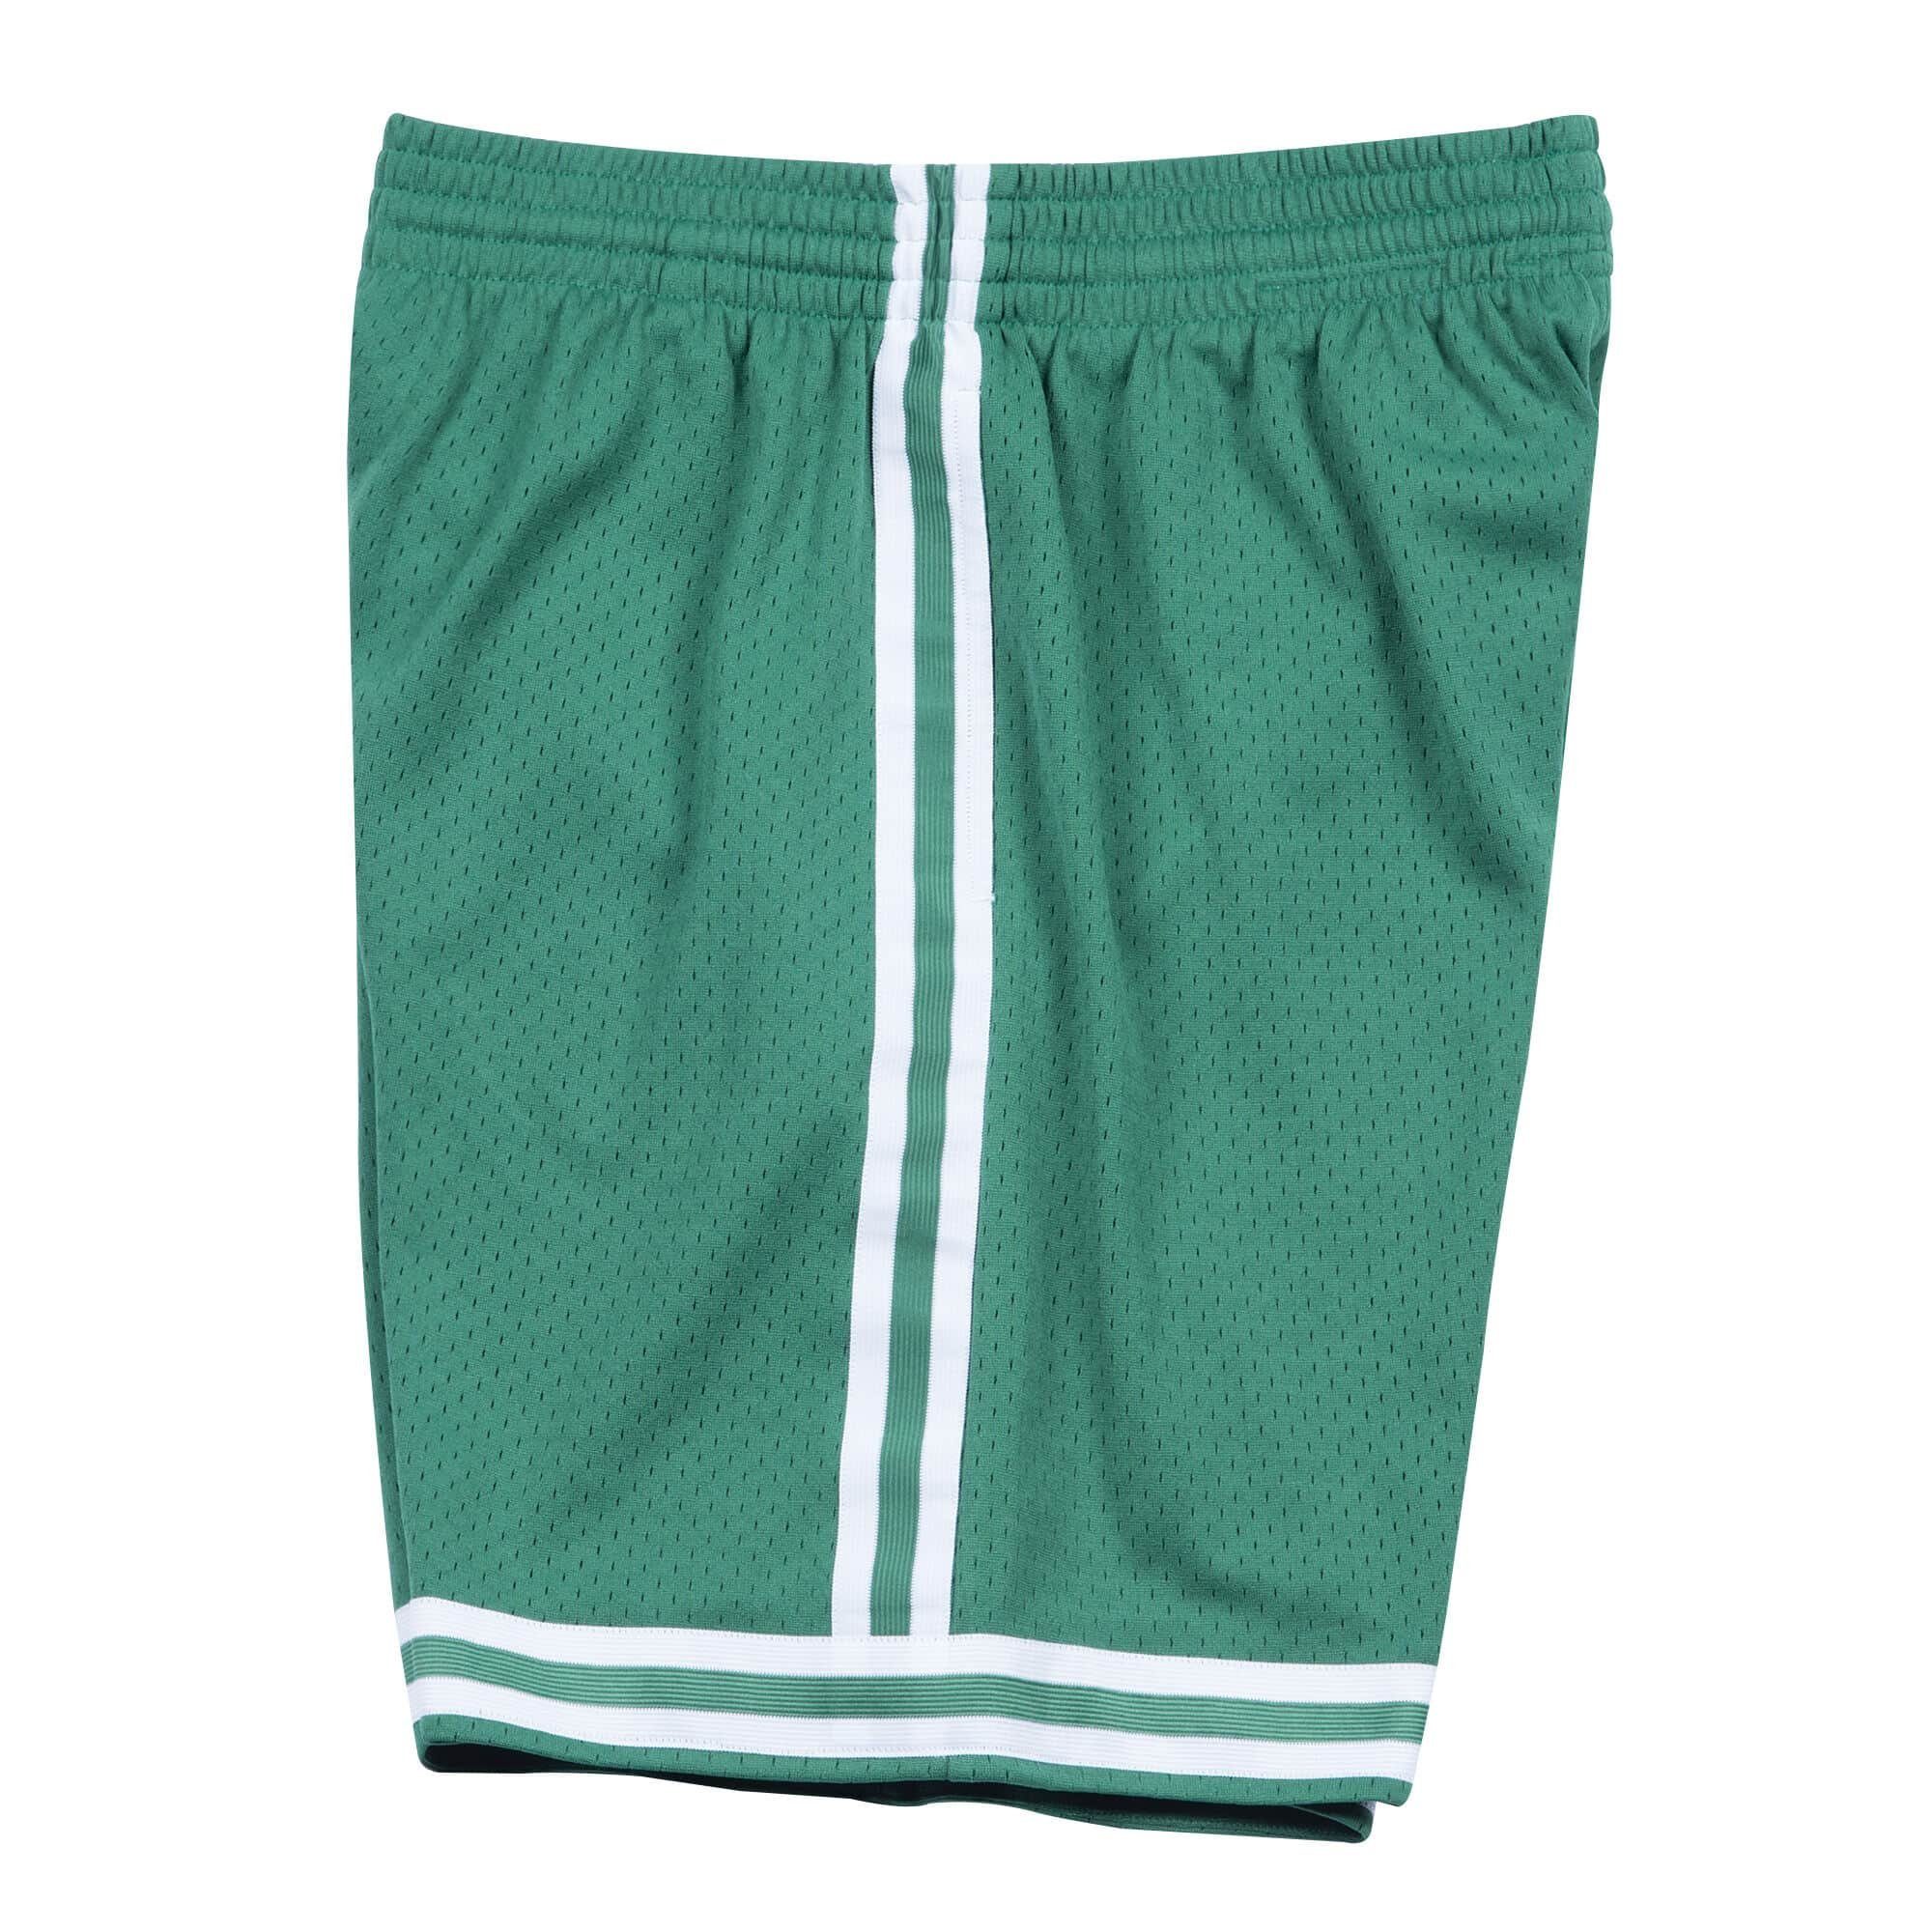 Ness Road Celtics 198586 Mitchell Shorts & Boston Swingman